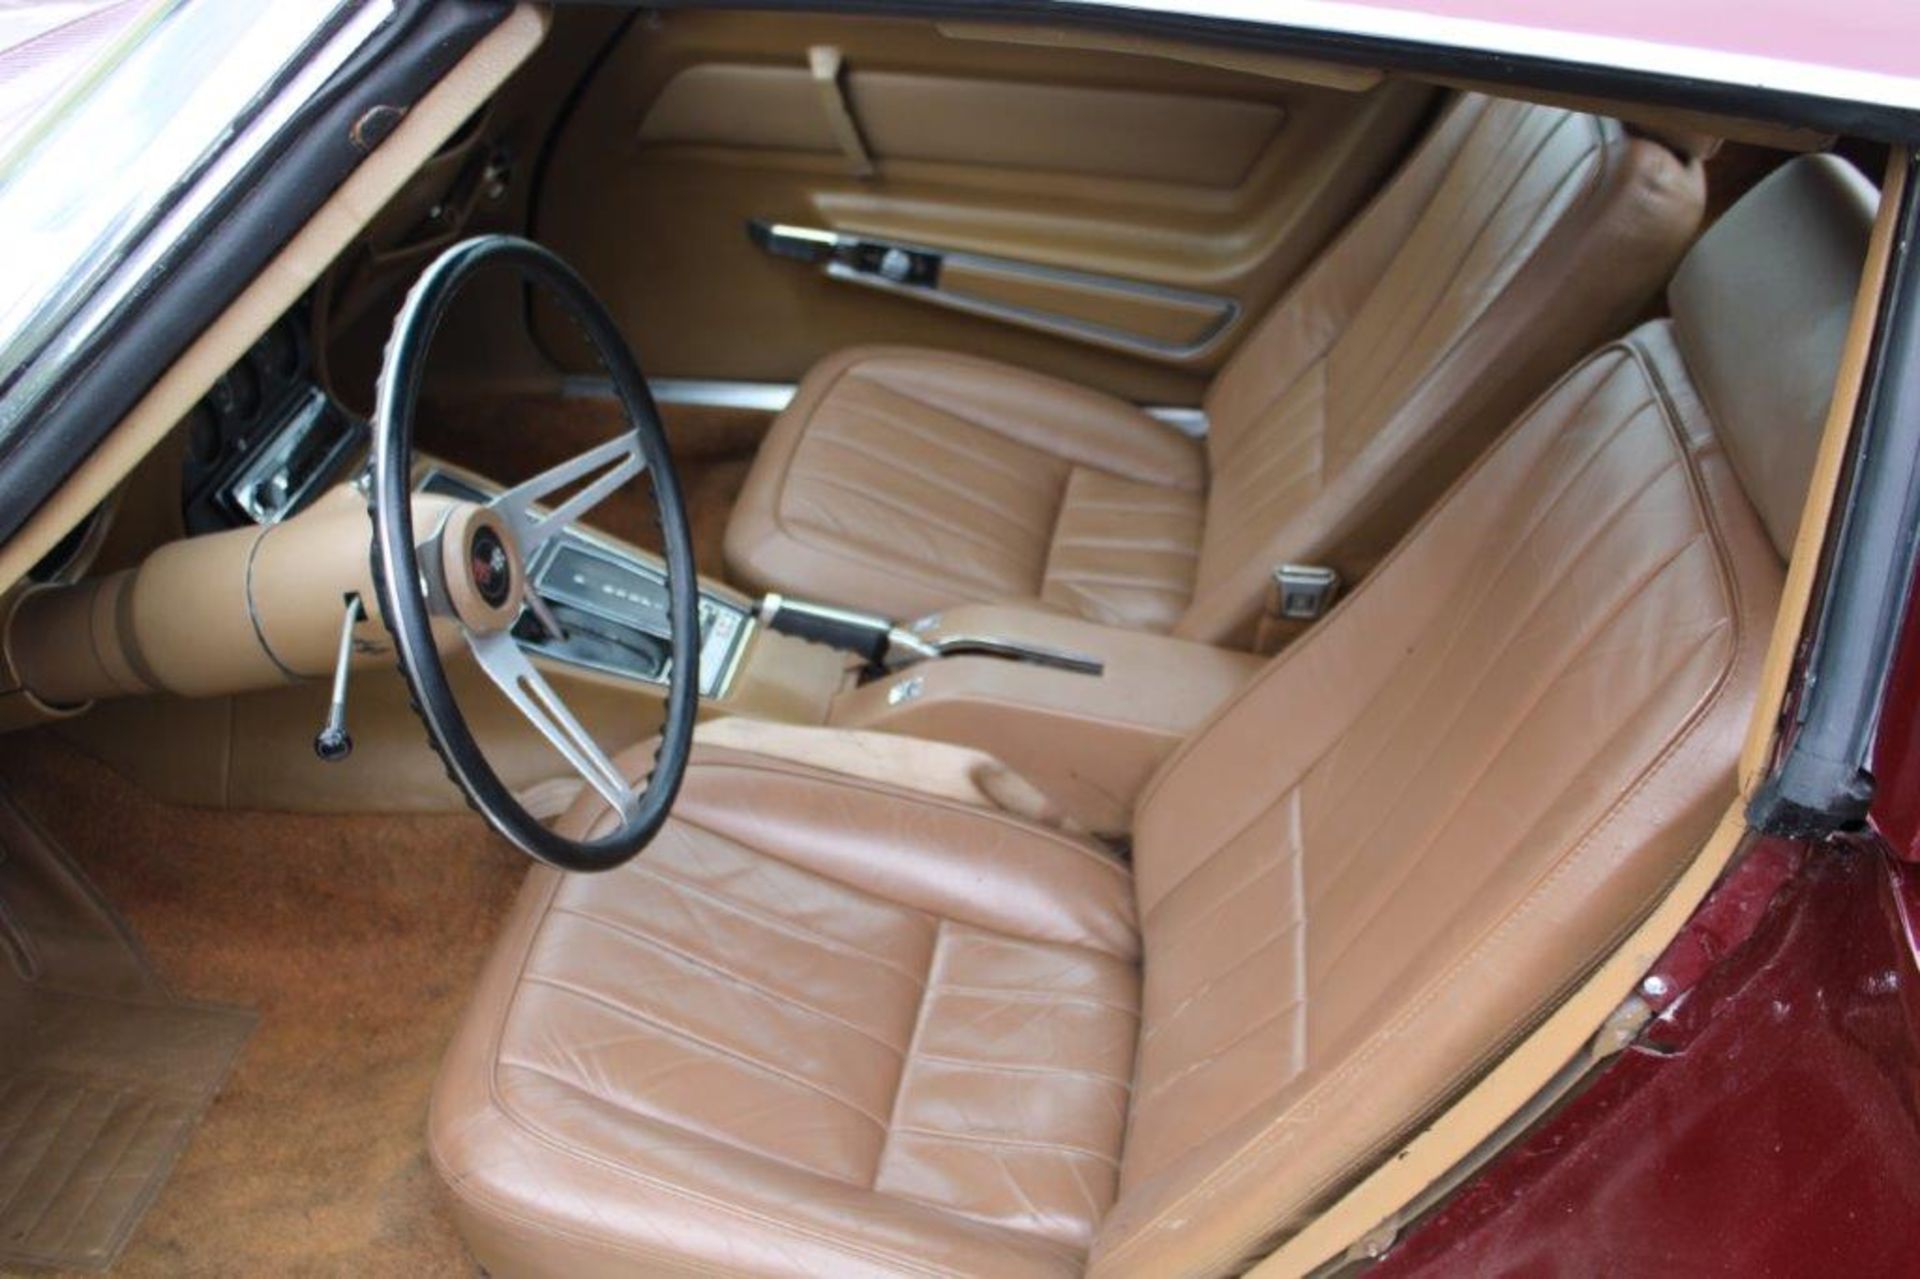 1969 Chevrolet Corvette C3 5.7 V8 Auto LHD - Image 6 of 16